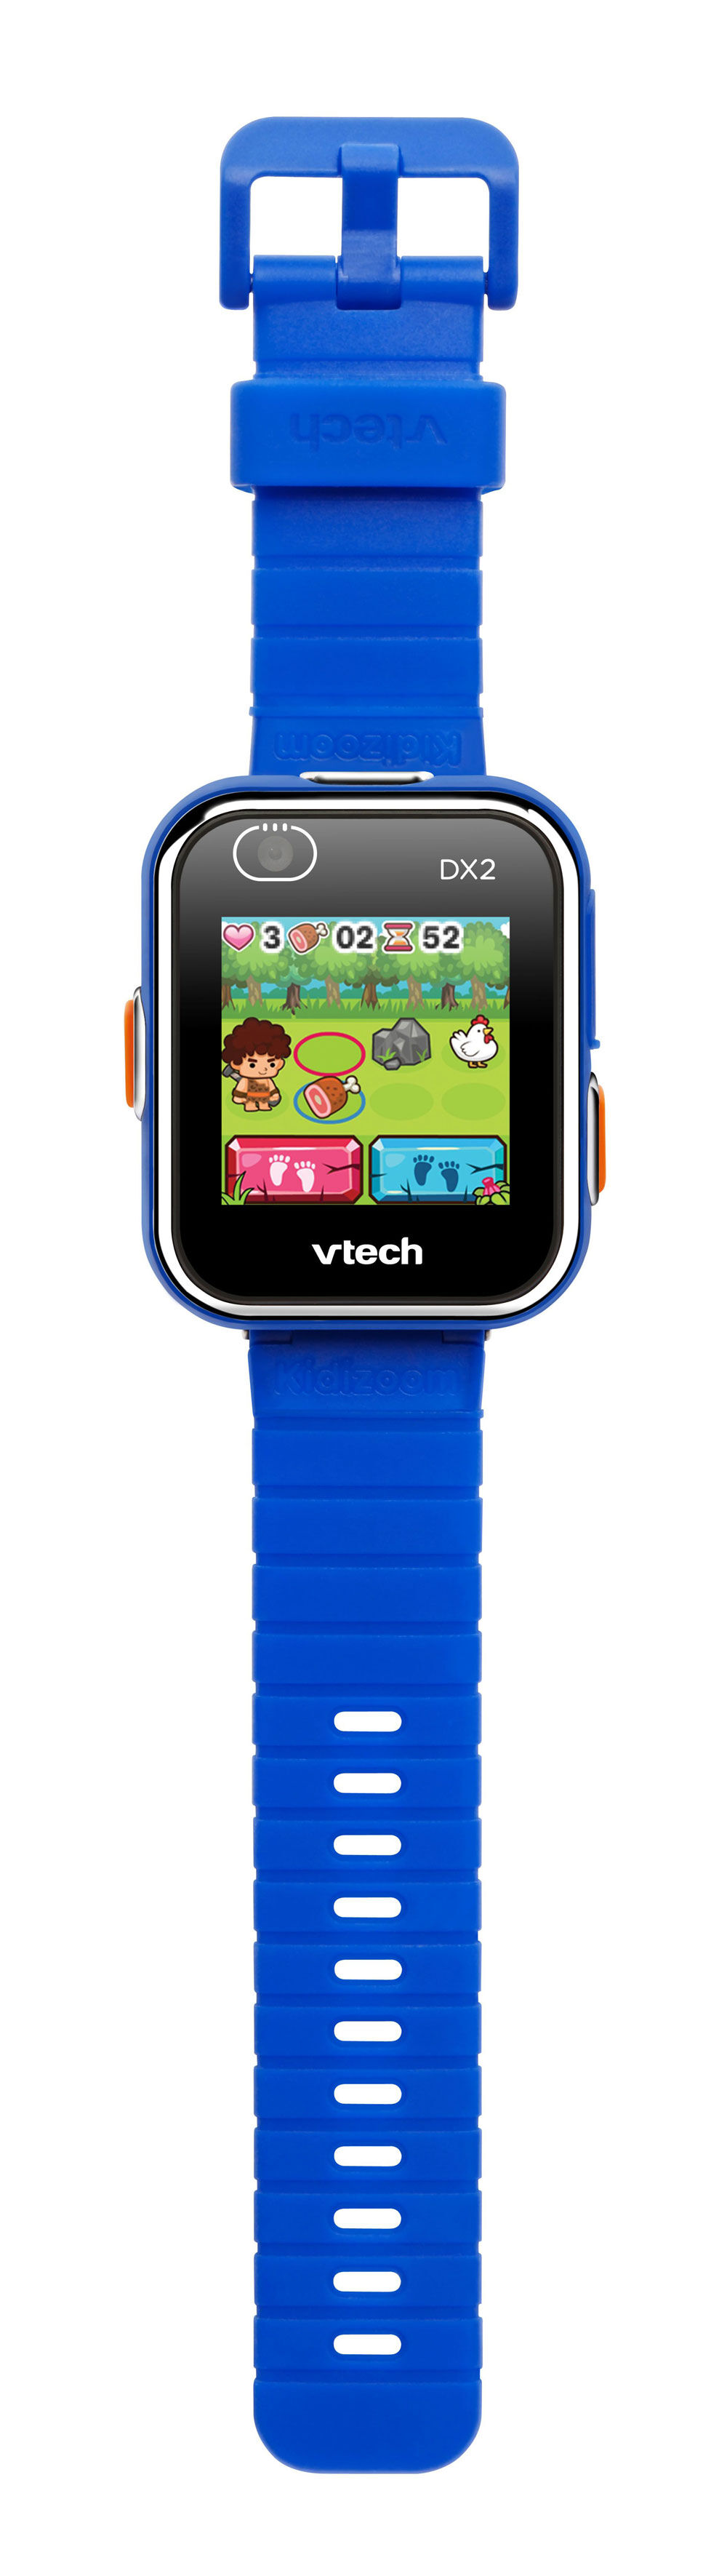 dx2 vtech watch